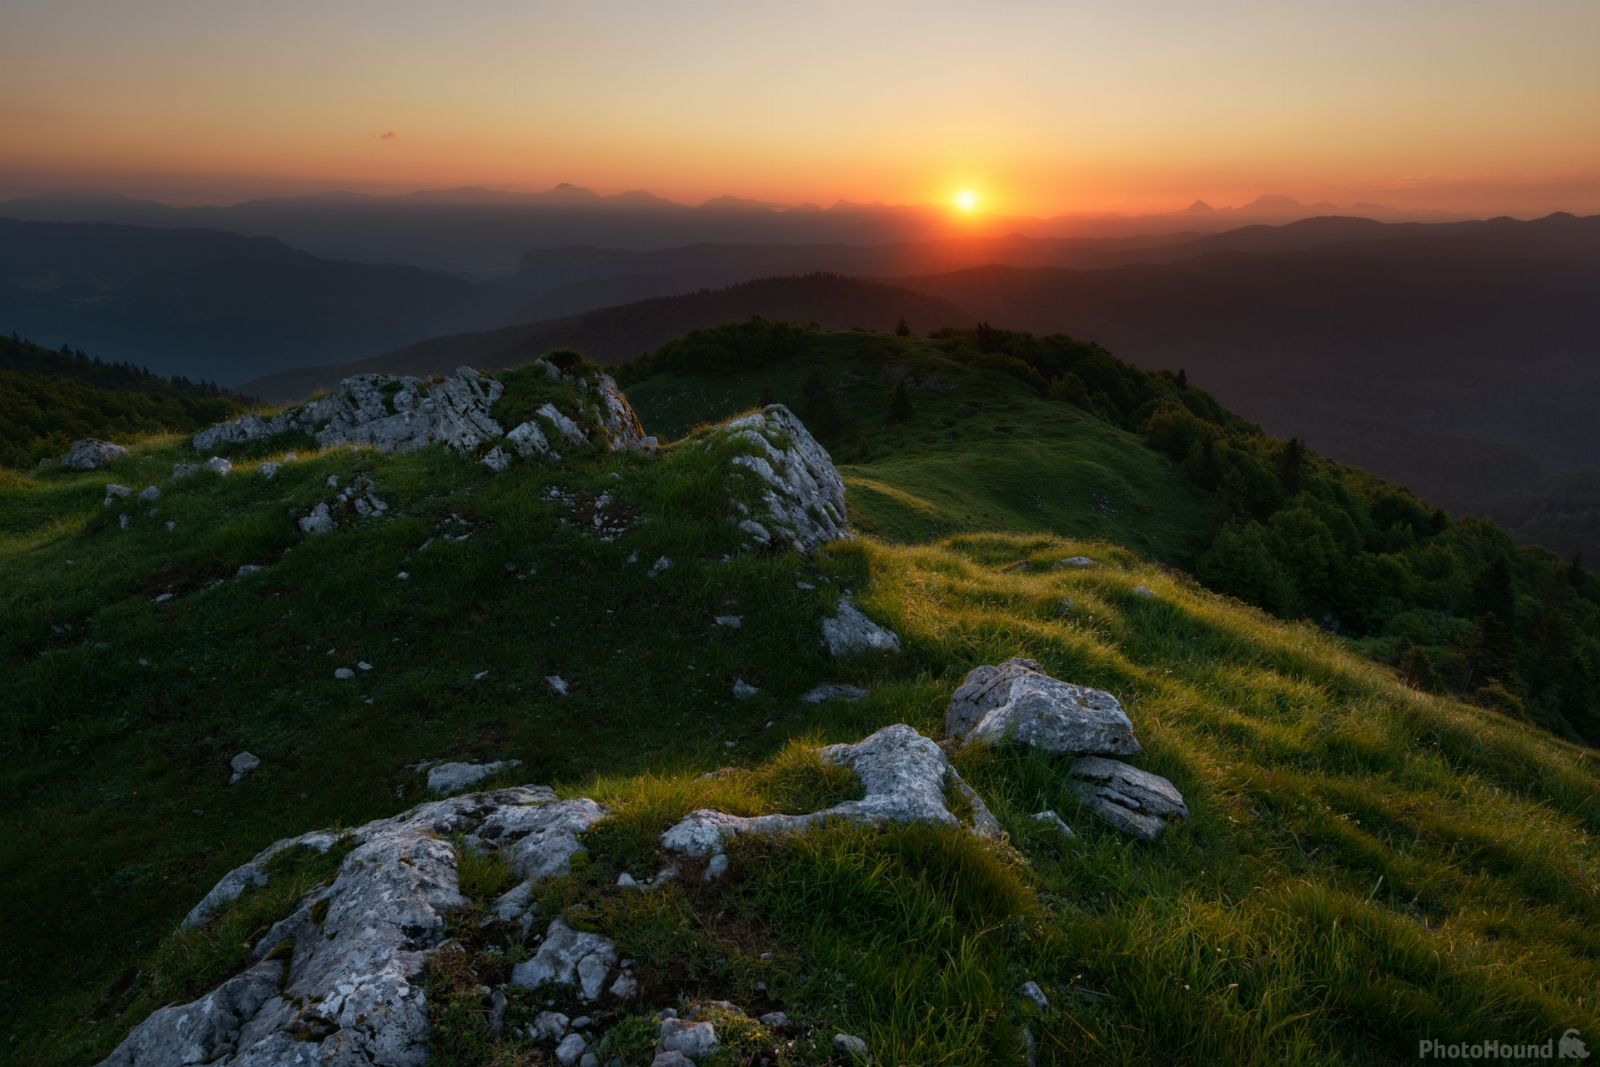 Image of Peaks of Soriška Planina by Luka Esenko